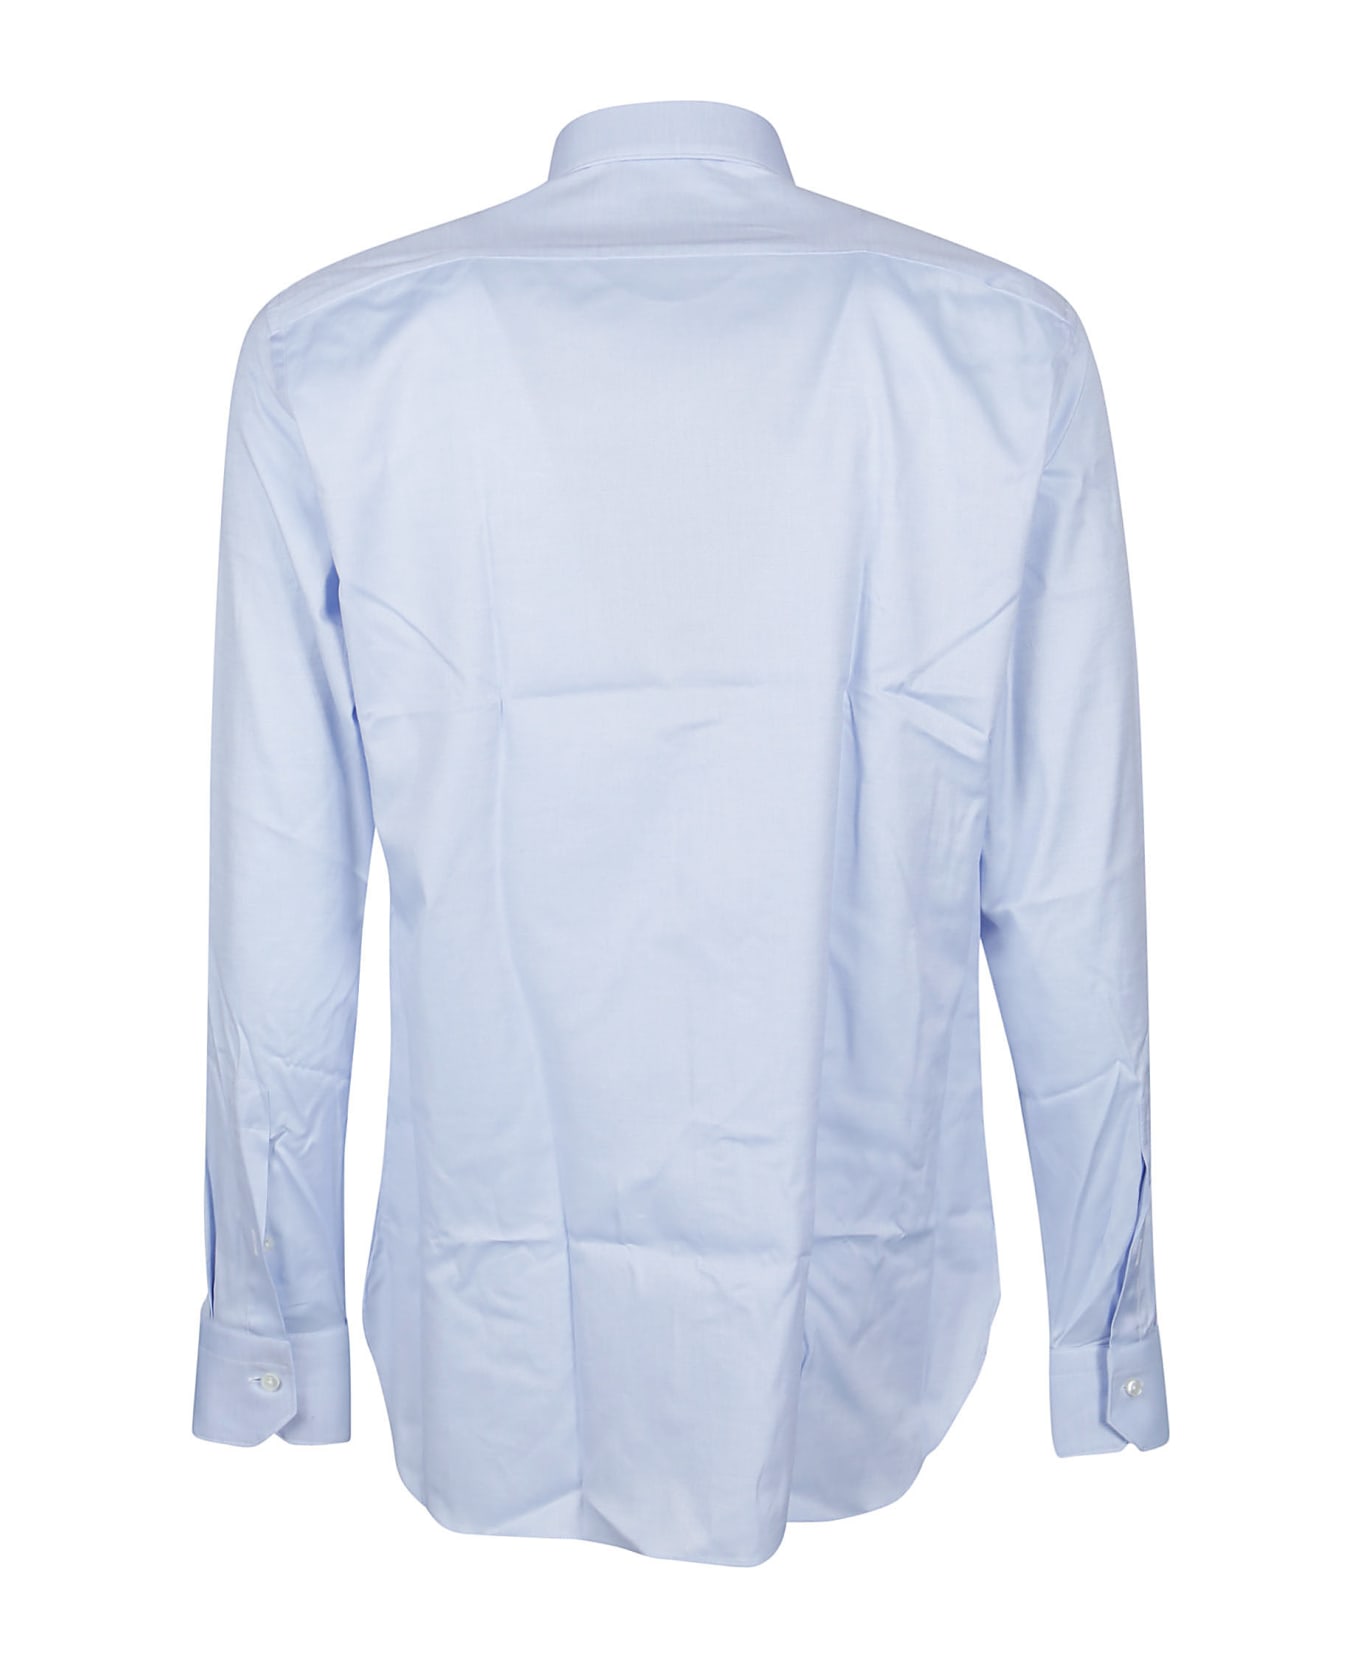 Zegna Lux Tailoring Long Sleeve Shirt - Azzurro